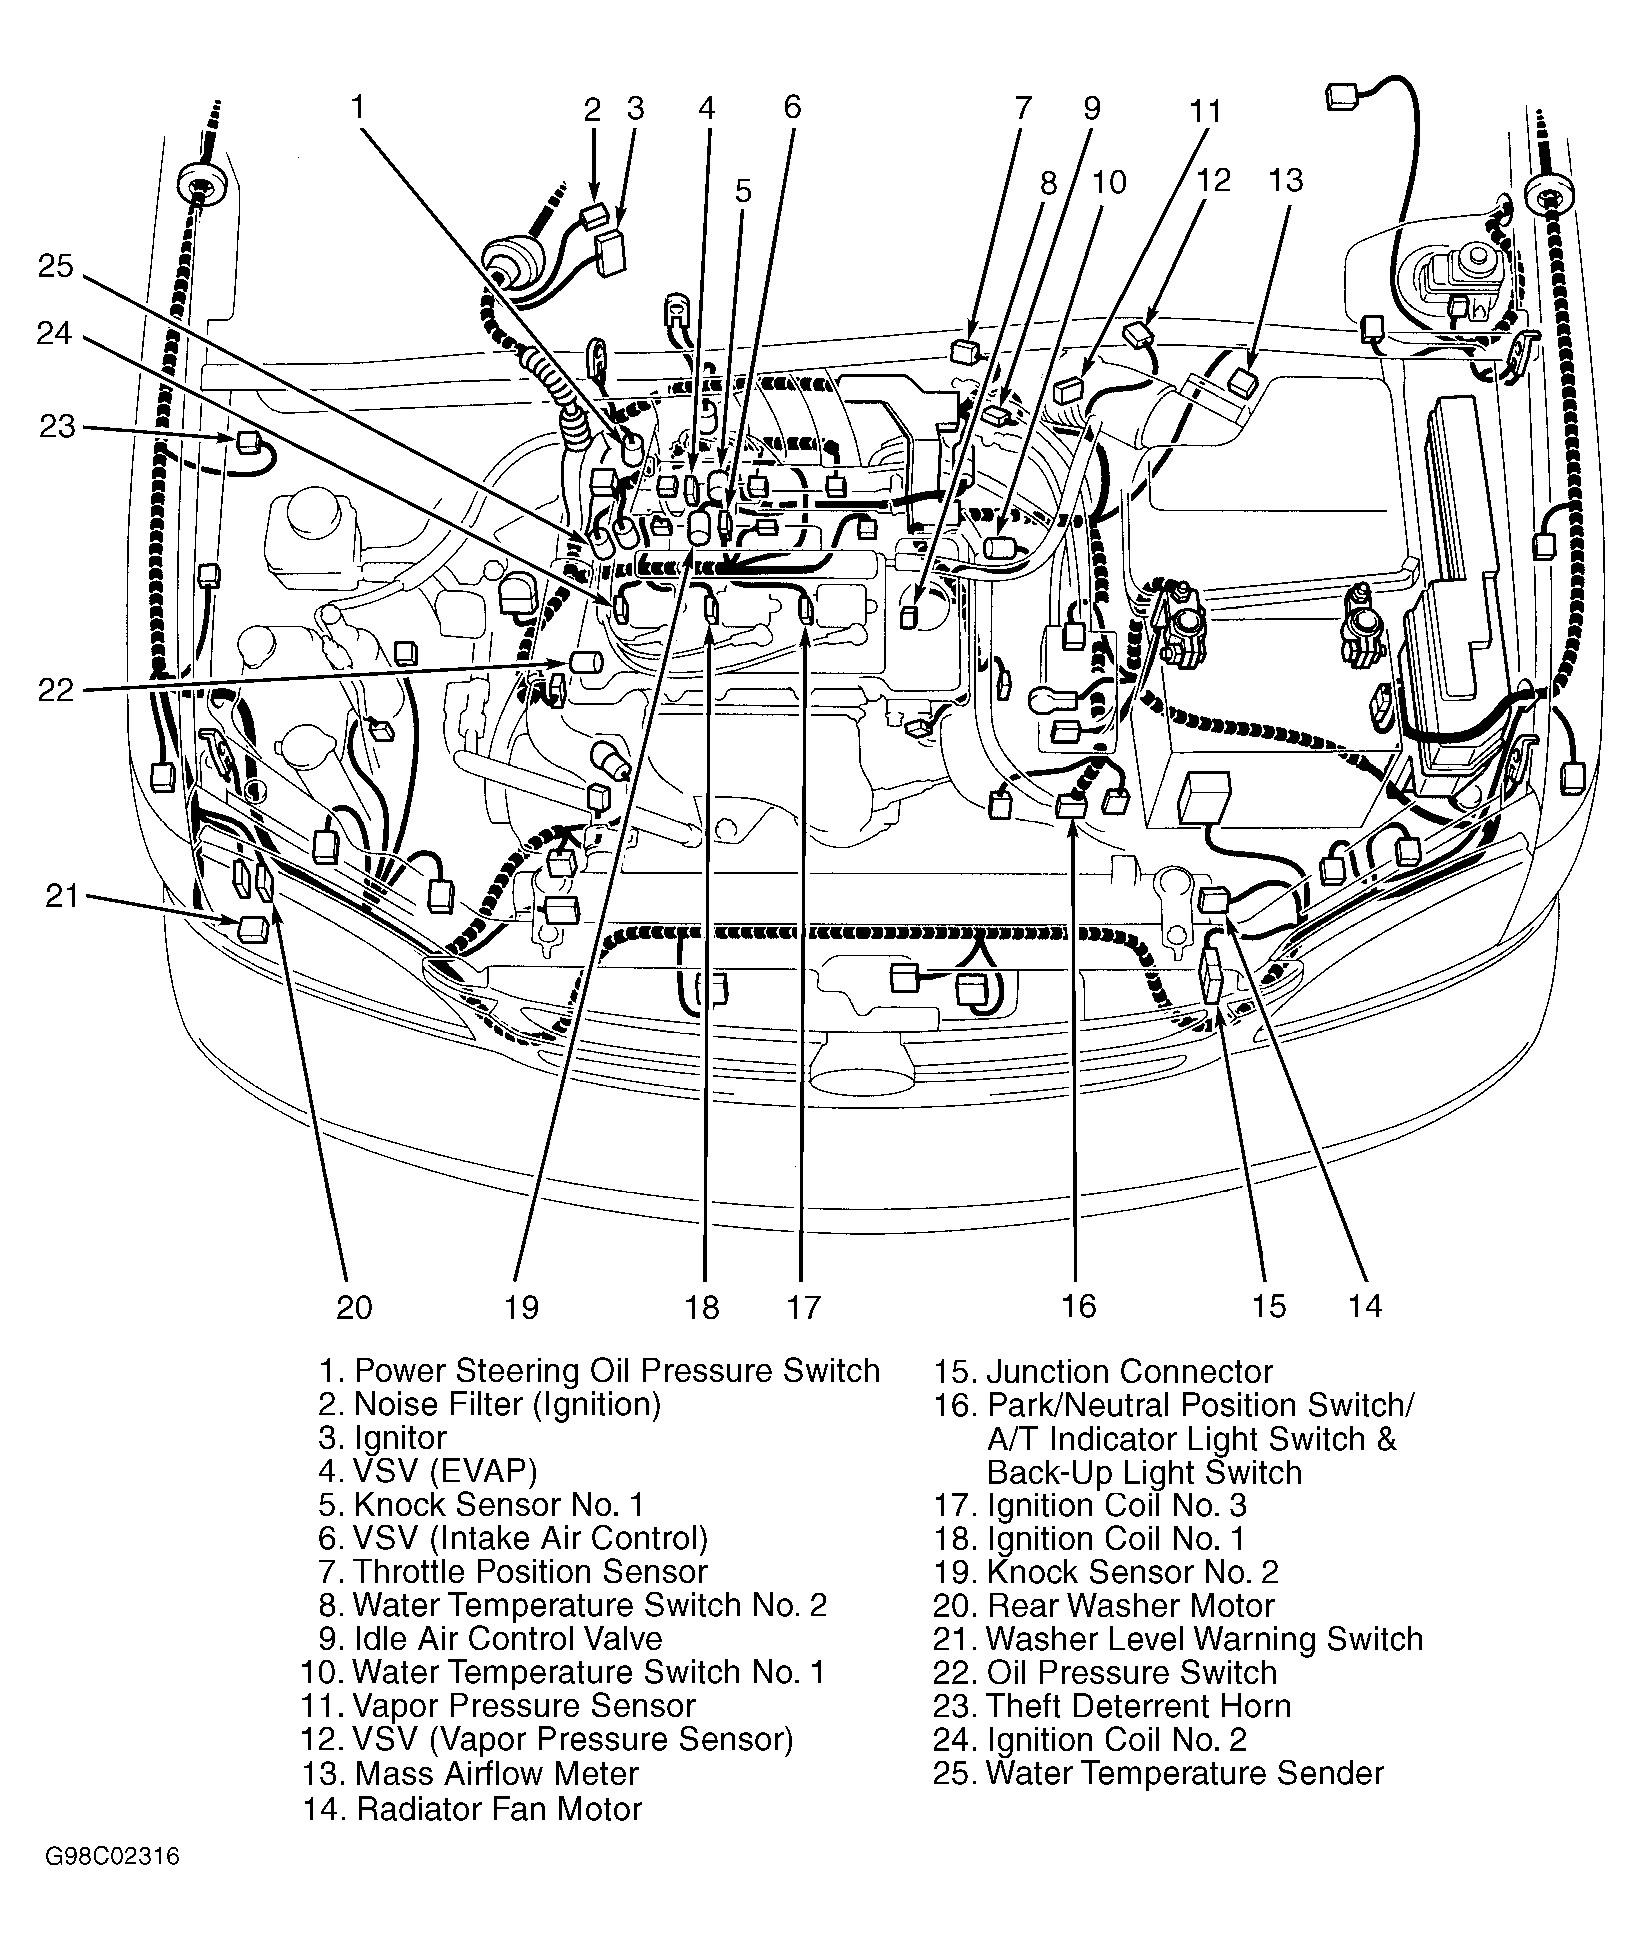 2001 Toyota Camry Starter Motor Wiring Diagram from detoxicrecenze.com